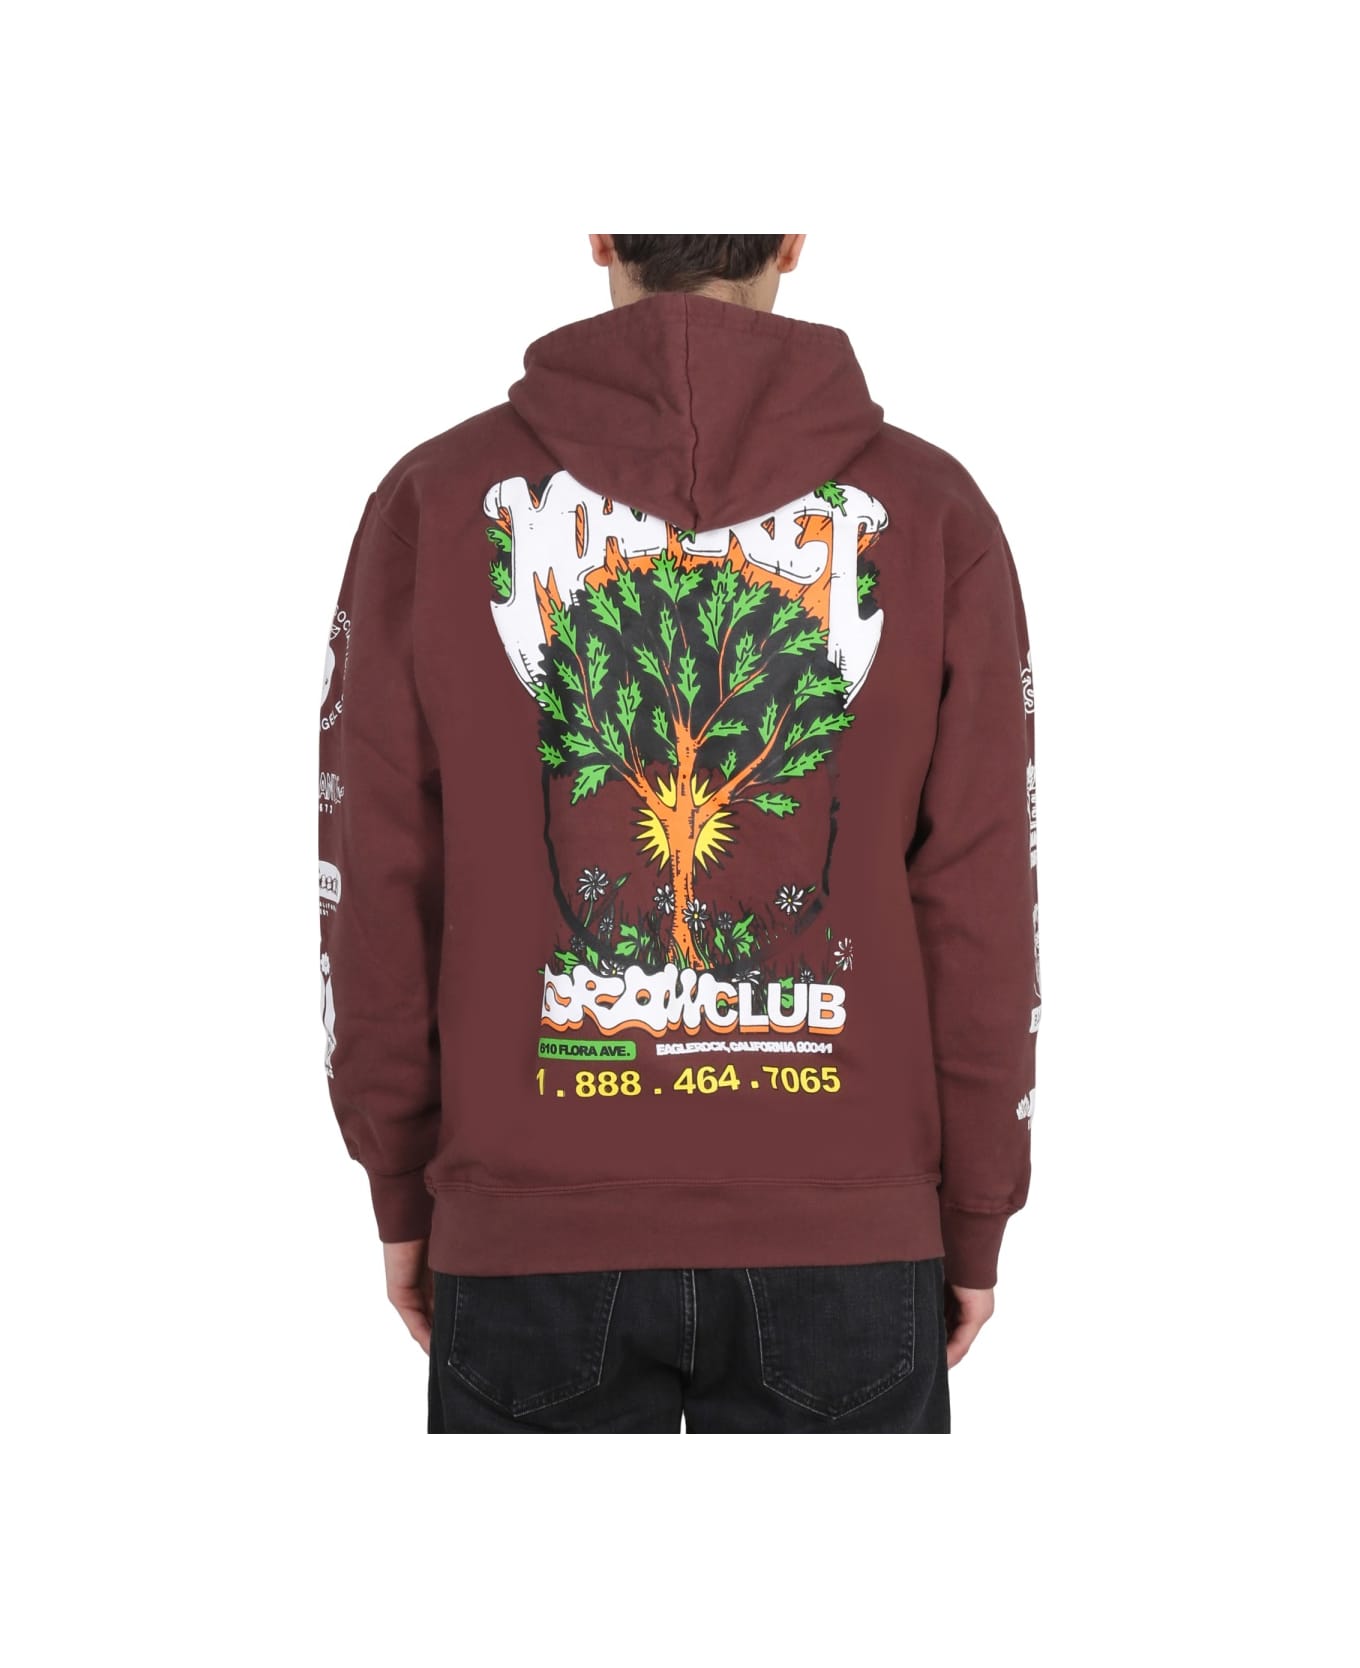 Market Growclub Sweatshirt - BROWN